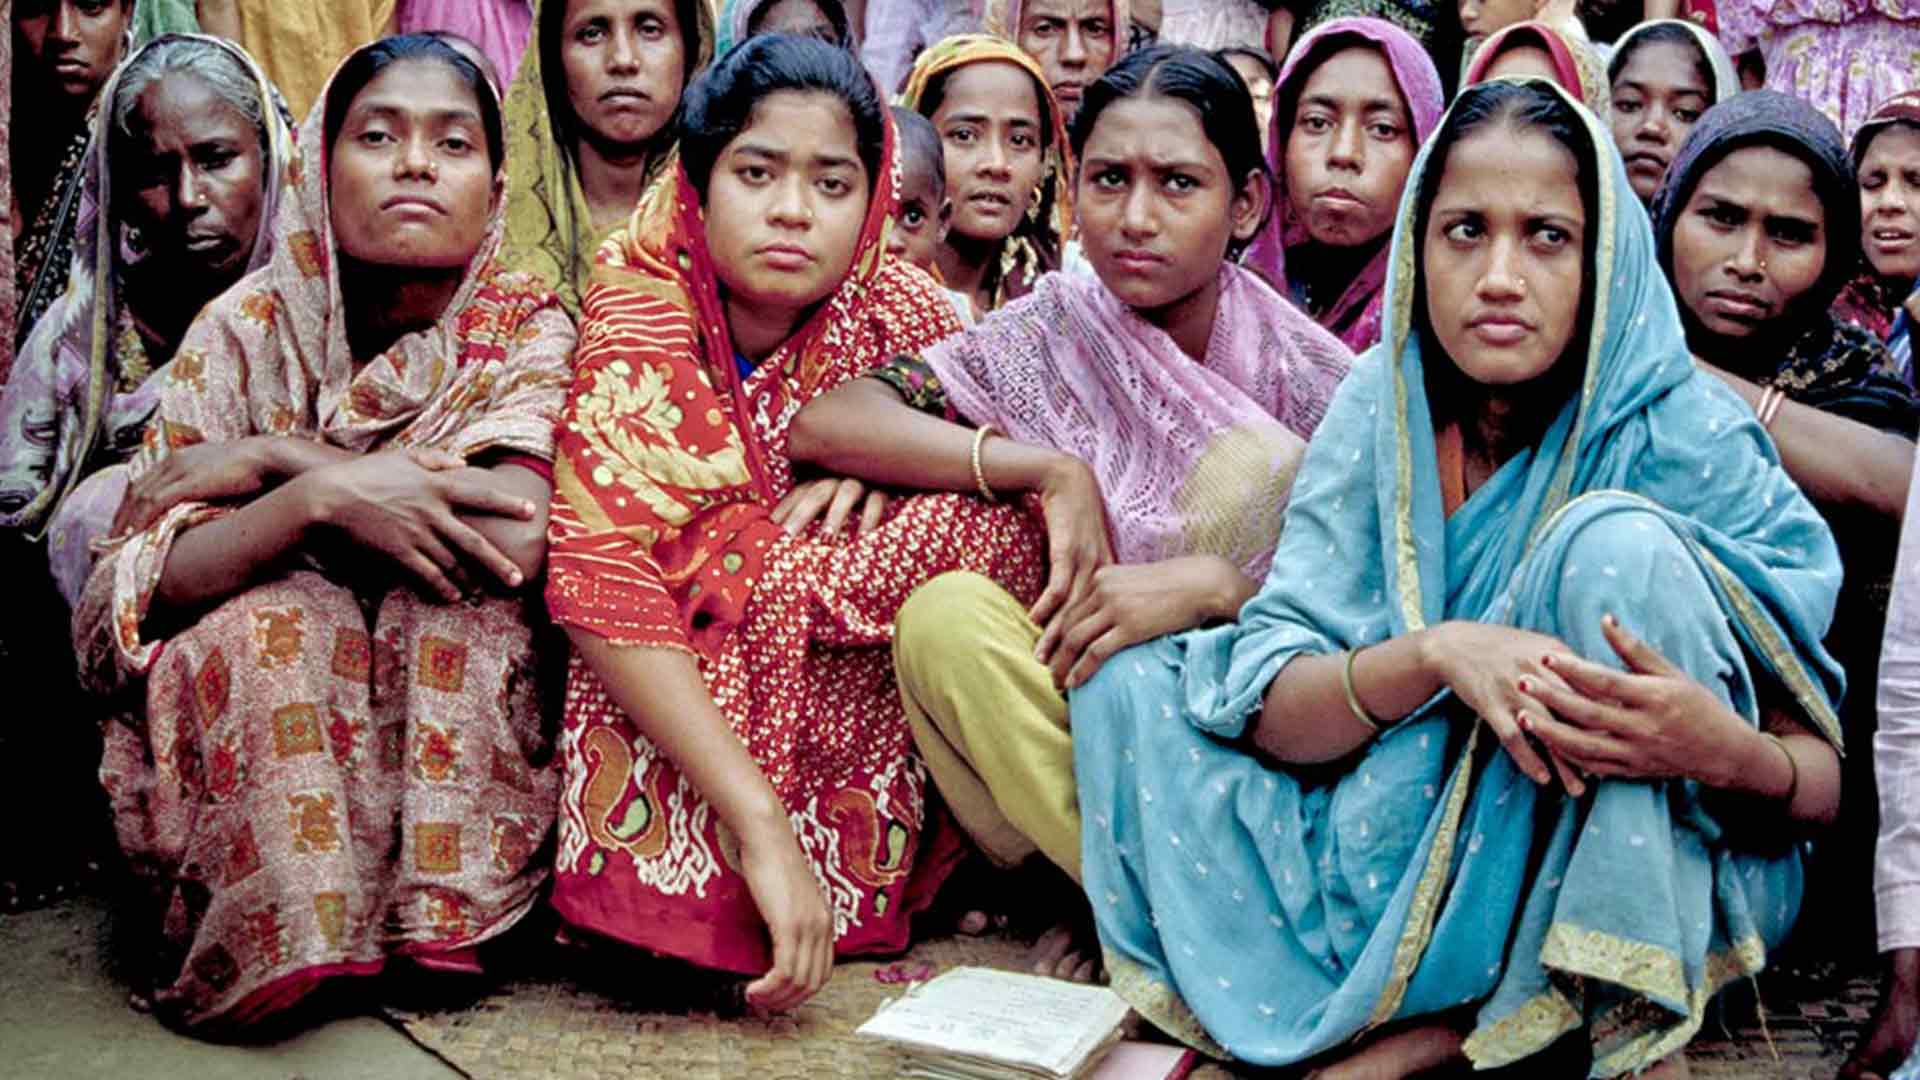 Women’s rights in Bangladesh